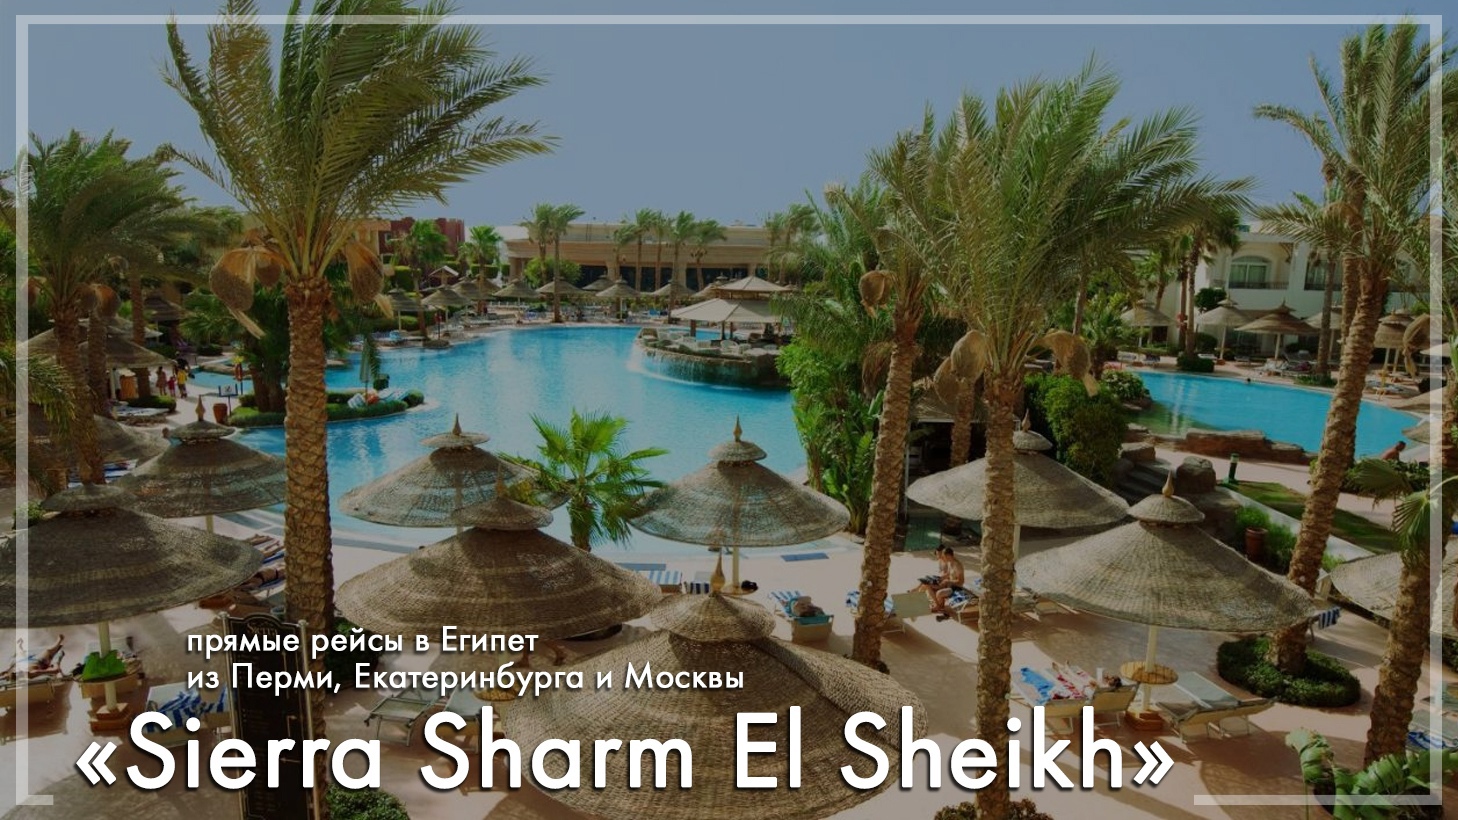 Sierra Sharm El Sheikh в Египте. Туры из Екатеринбурга